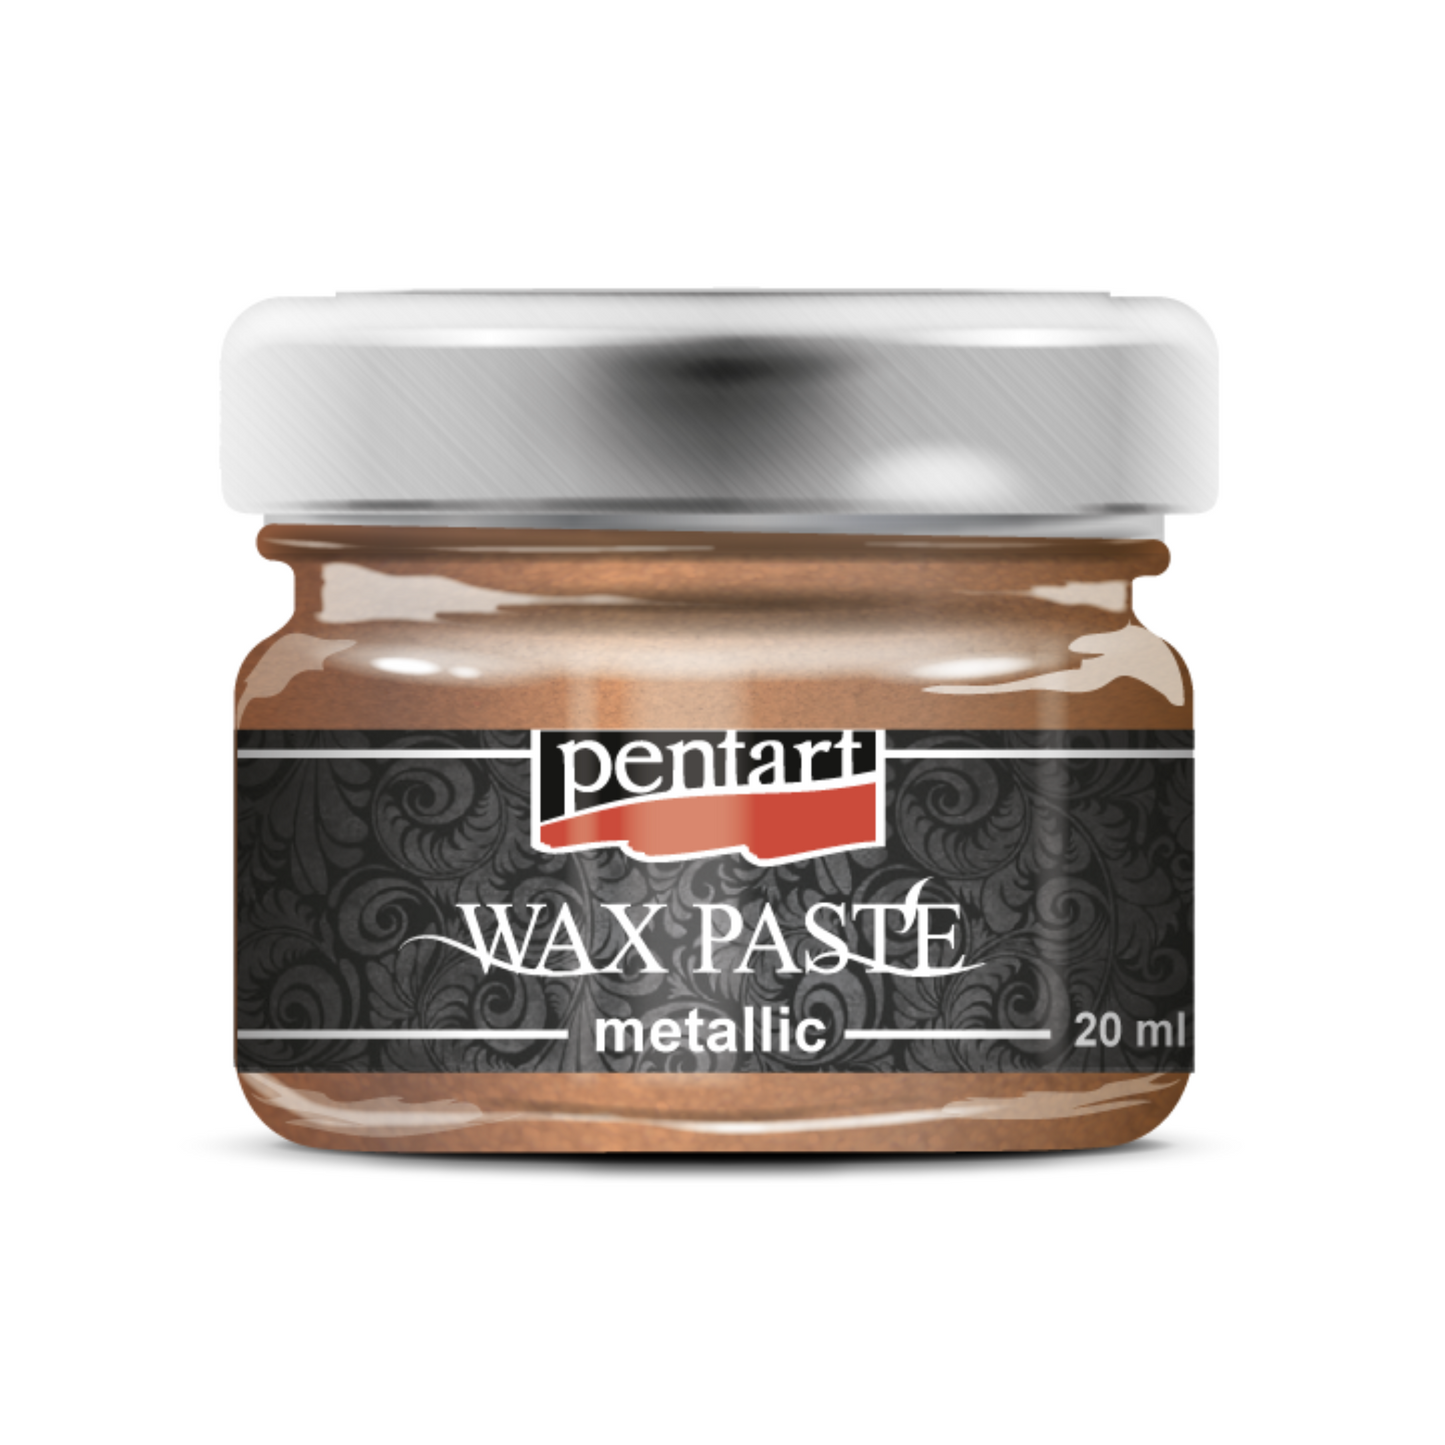 Wax Paste - Metallic Bronze 20 ml by Pentart available at Milton's Daughter